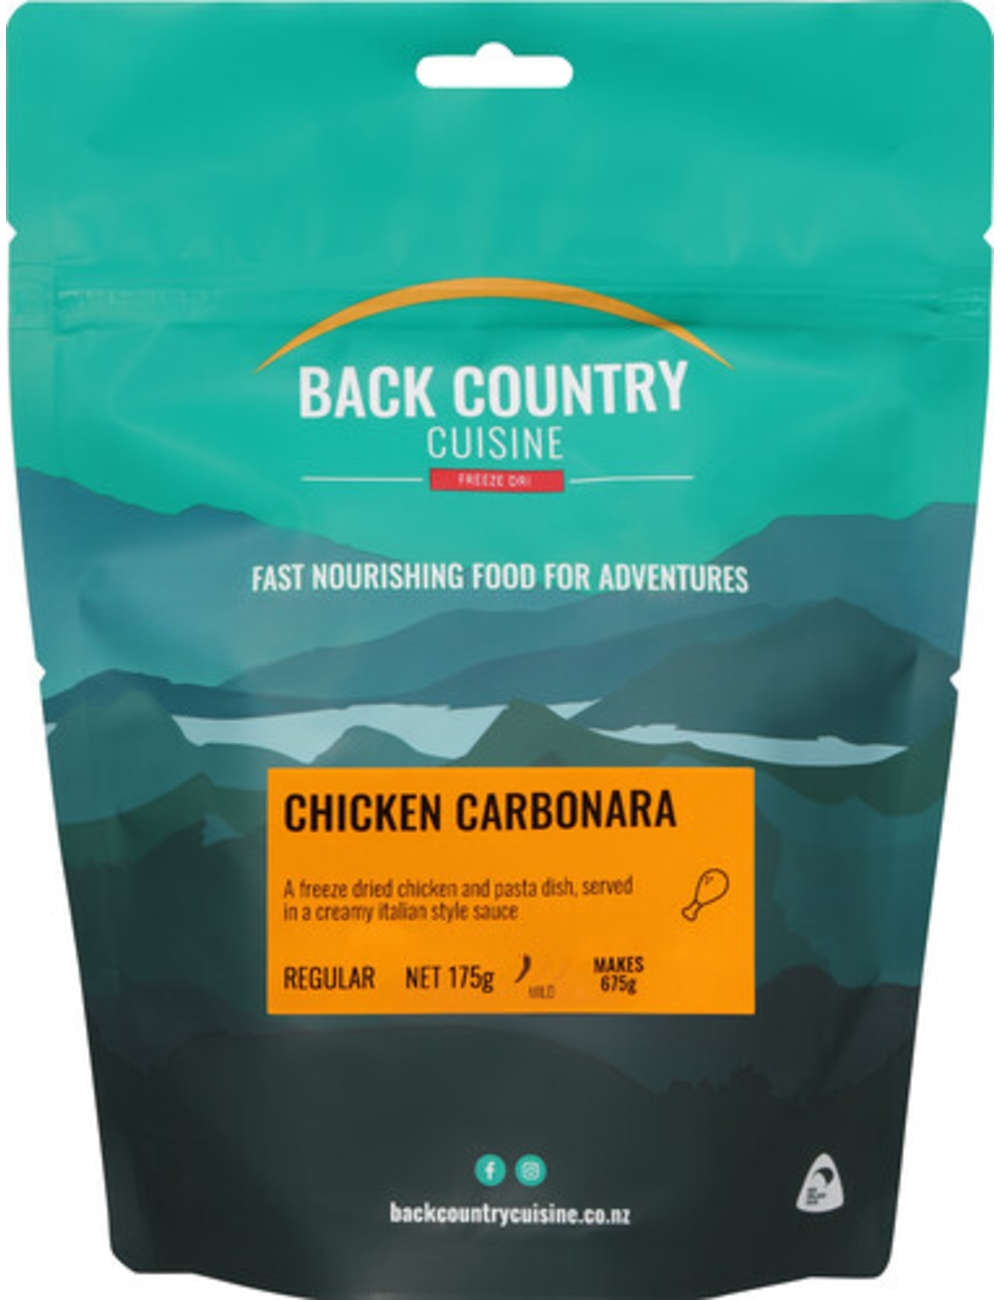 Back Country Cuisine Meals - Chicken Carbonara - Find Your Feet Australia Hobart Launceston Tasmania